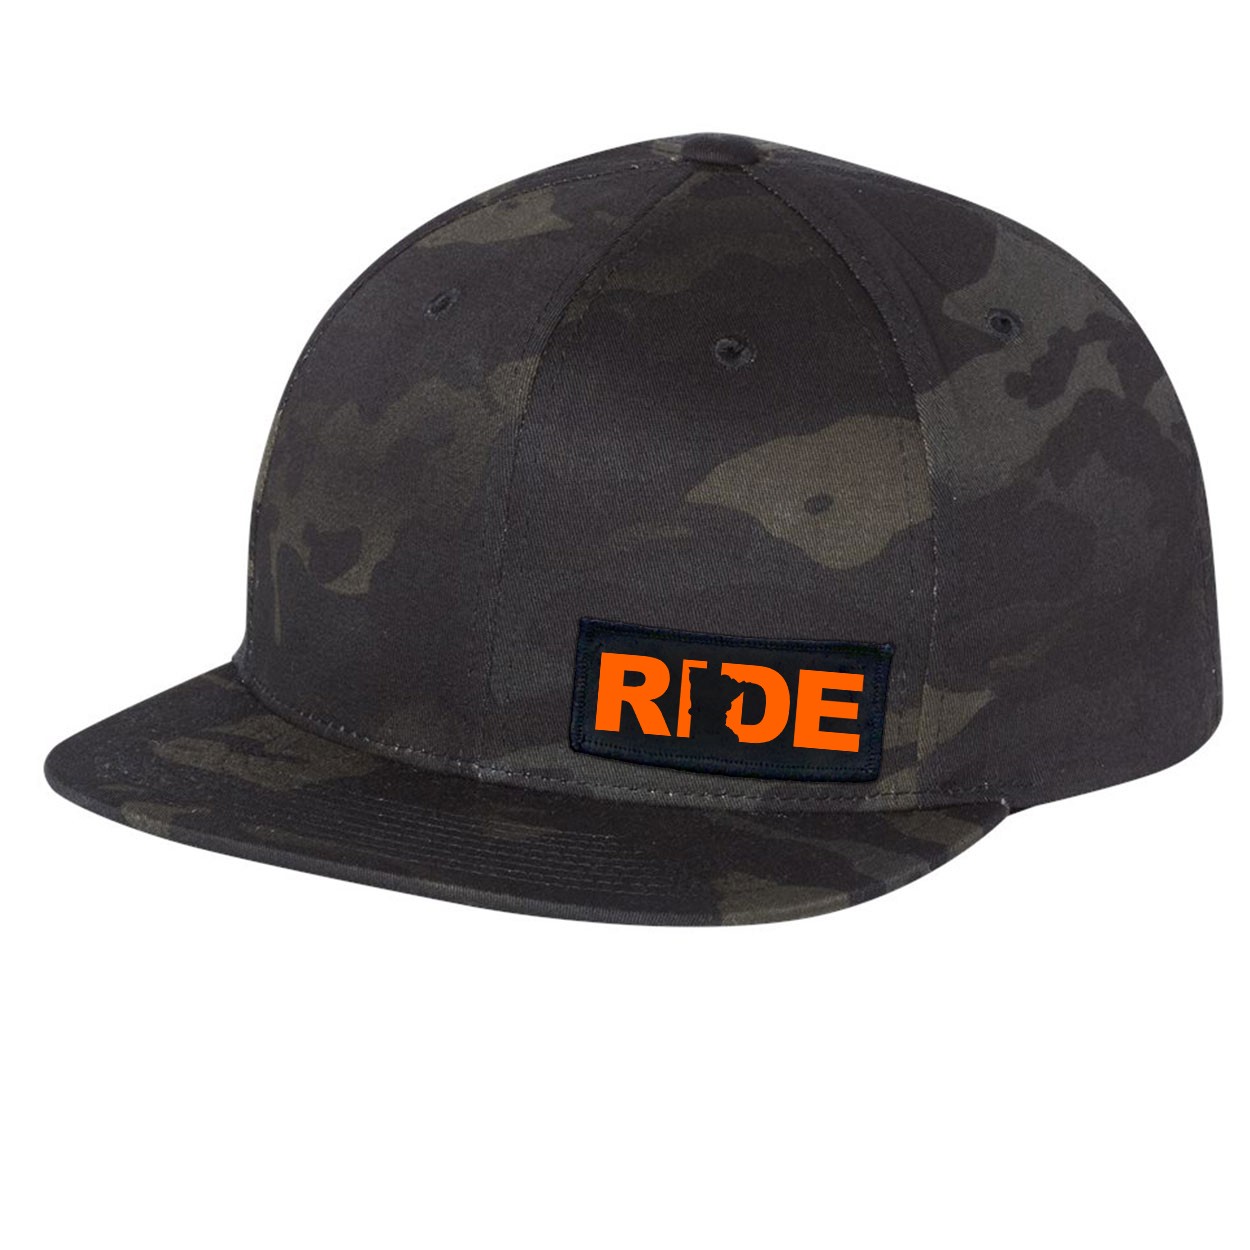 Ride Minnesota Night Out Woven Patch Flat Brim Snapback Hat Black Camo (Orange Logo)